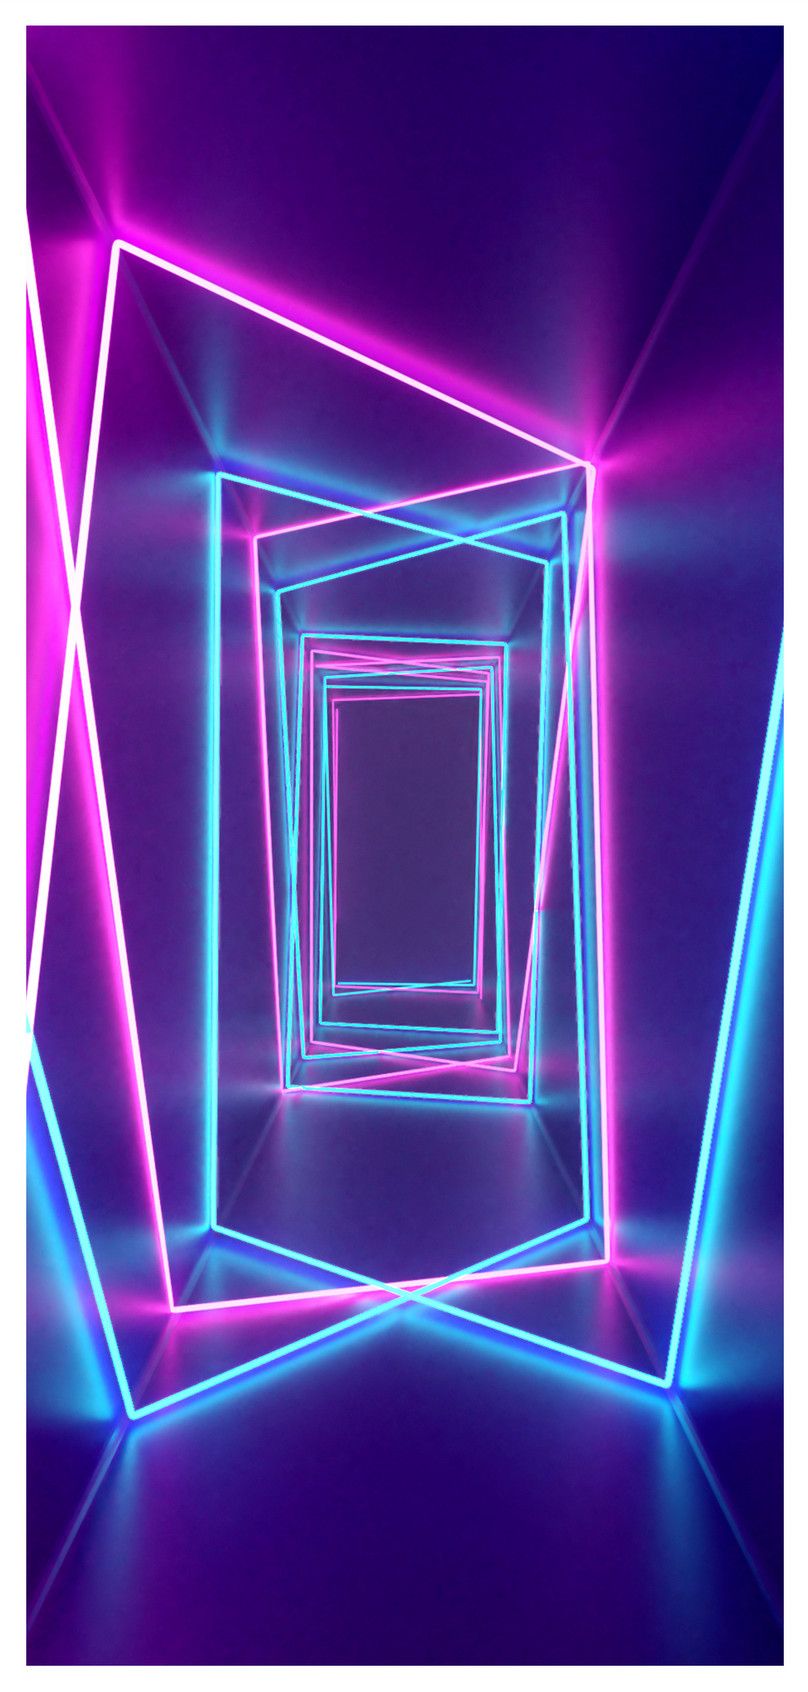 neon scene mobile wallpaper background image free download